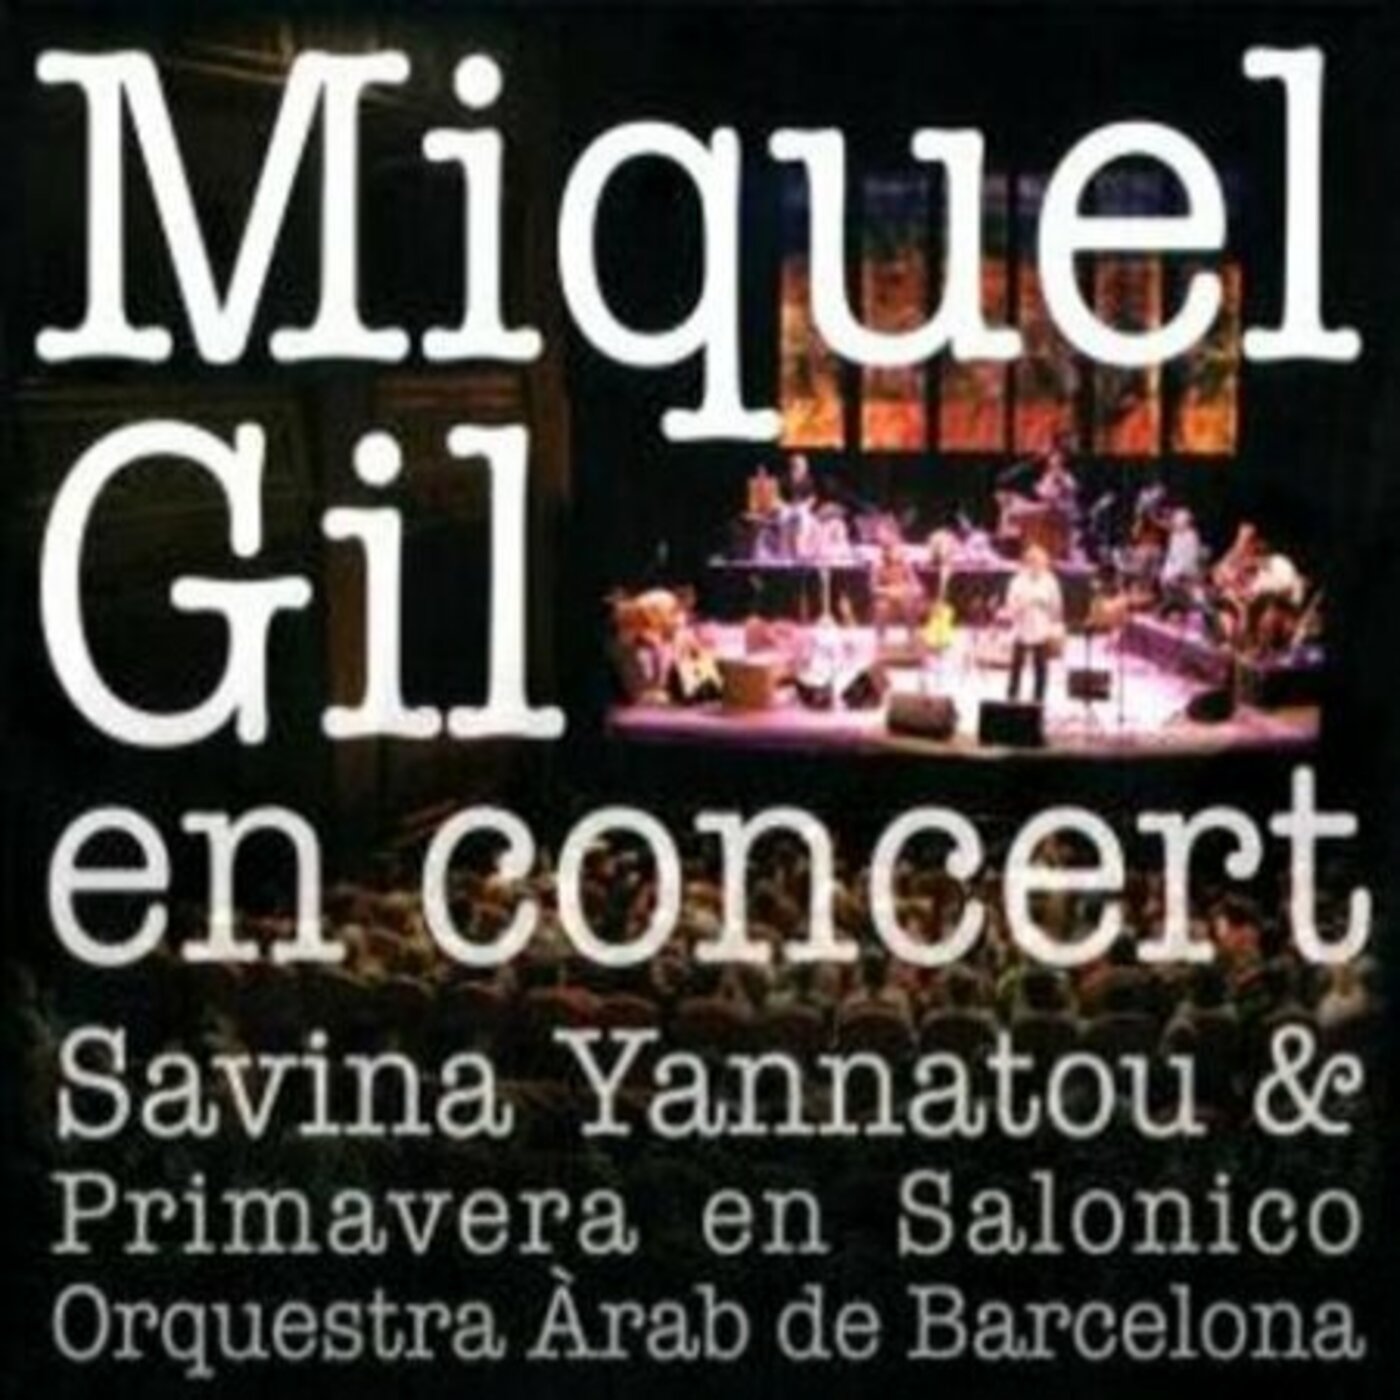 Miquel Gil - En concert | musica en valencià